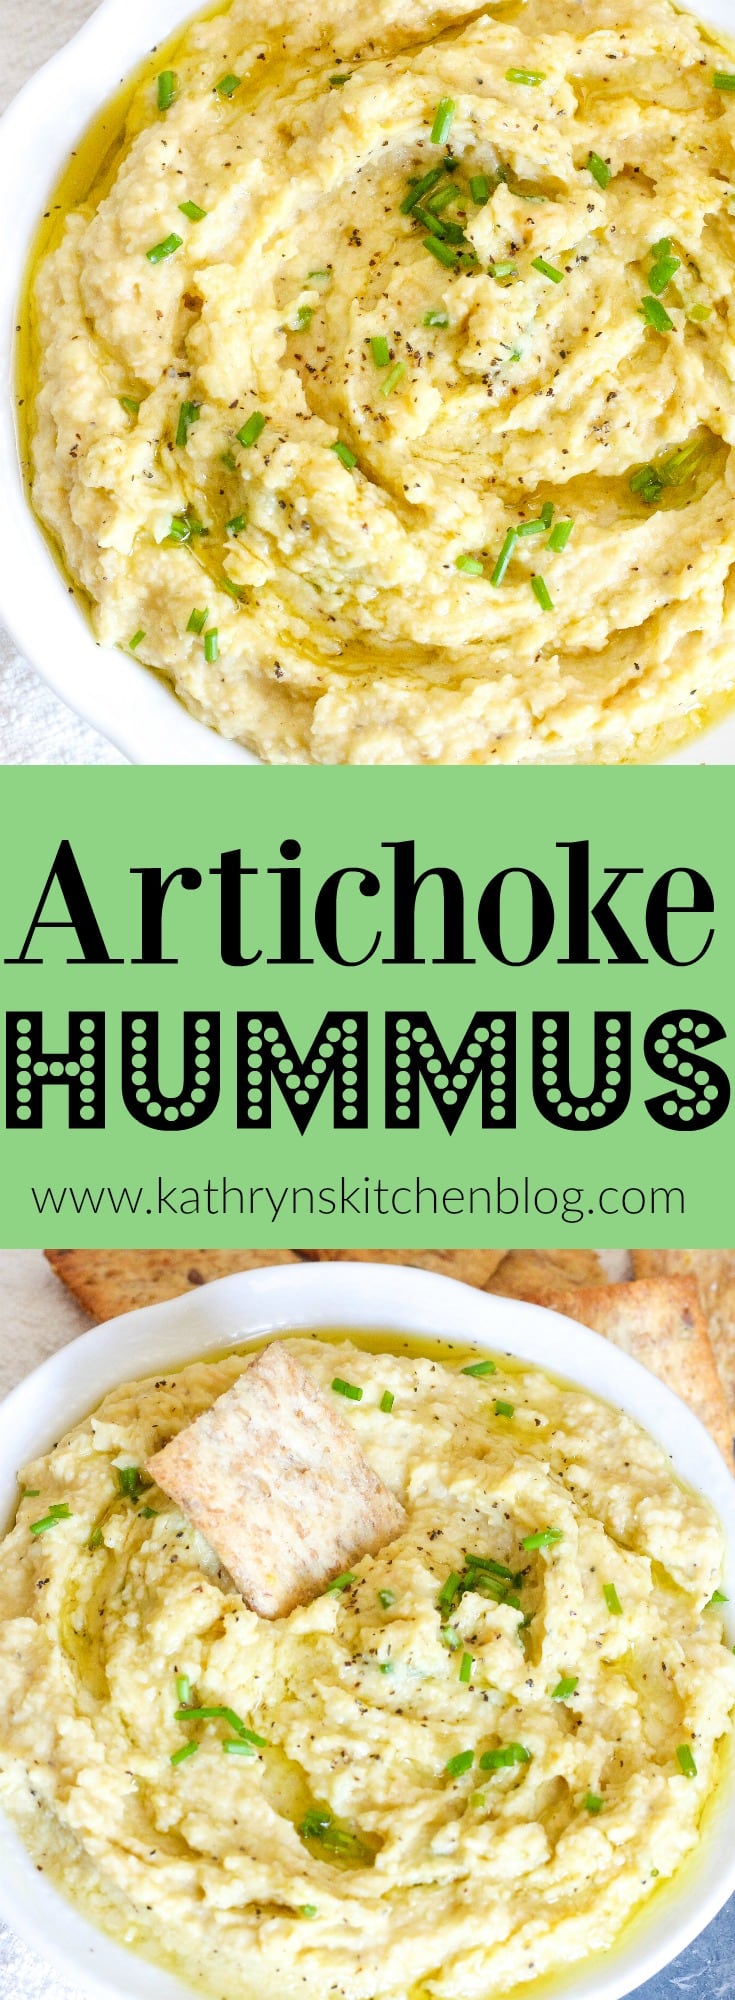 artichoke hummus